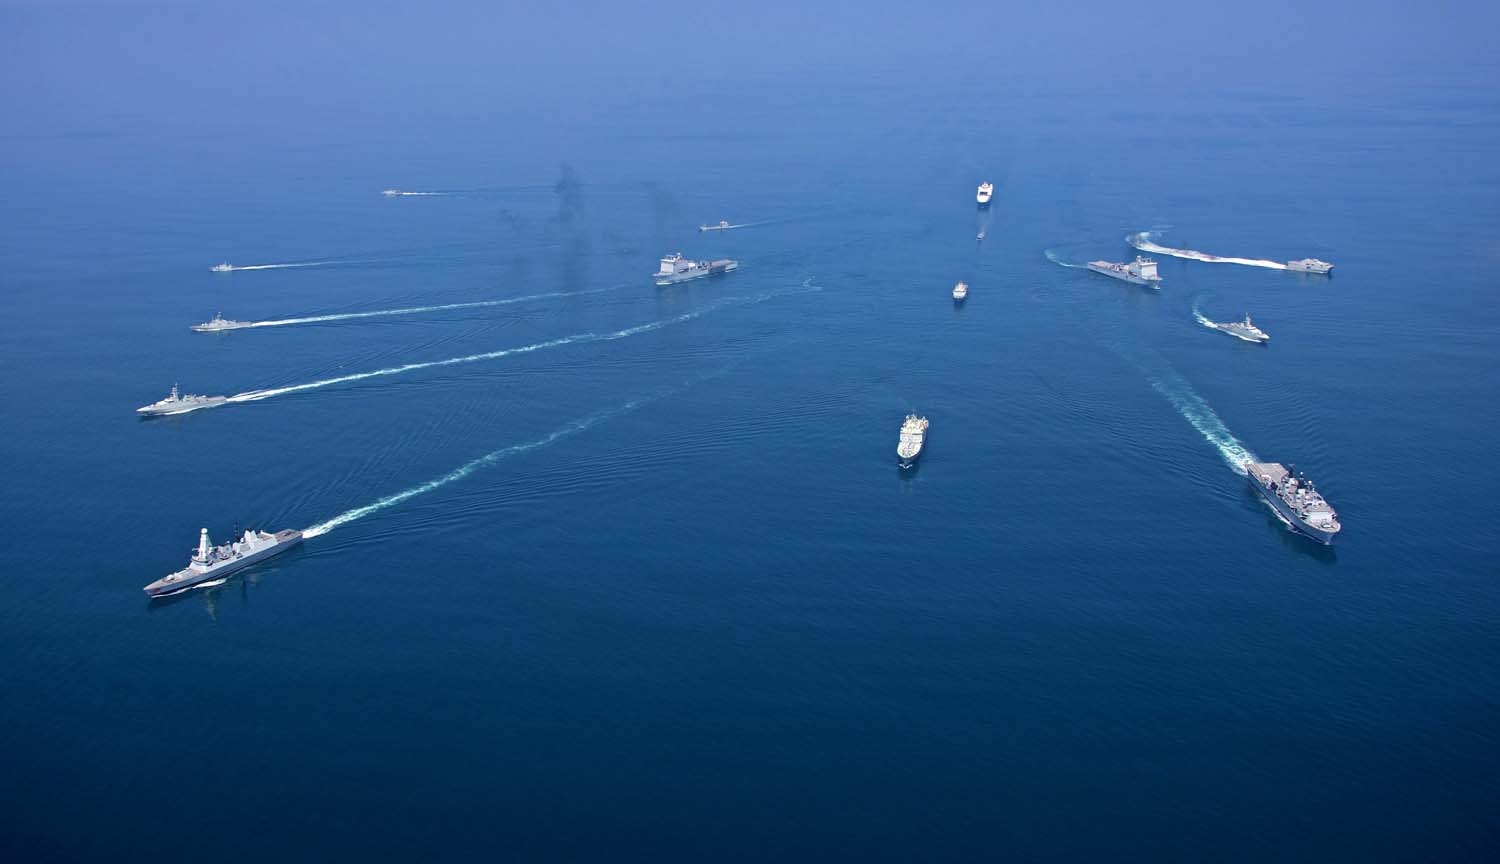 armada espanola eu naval task force flagship a14